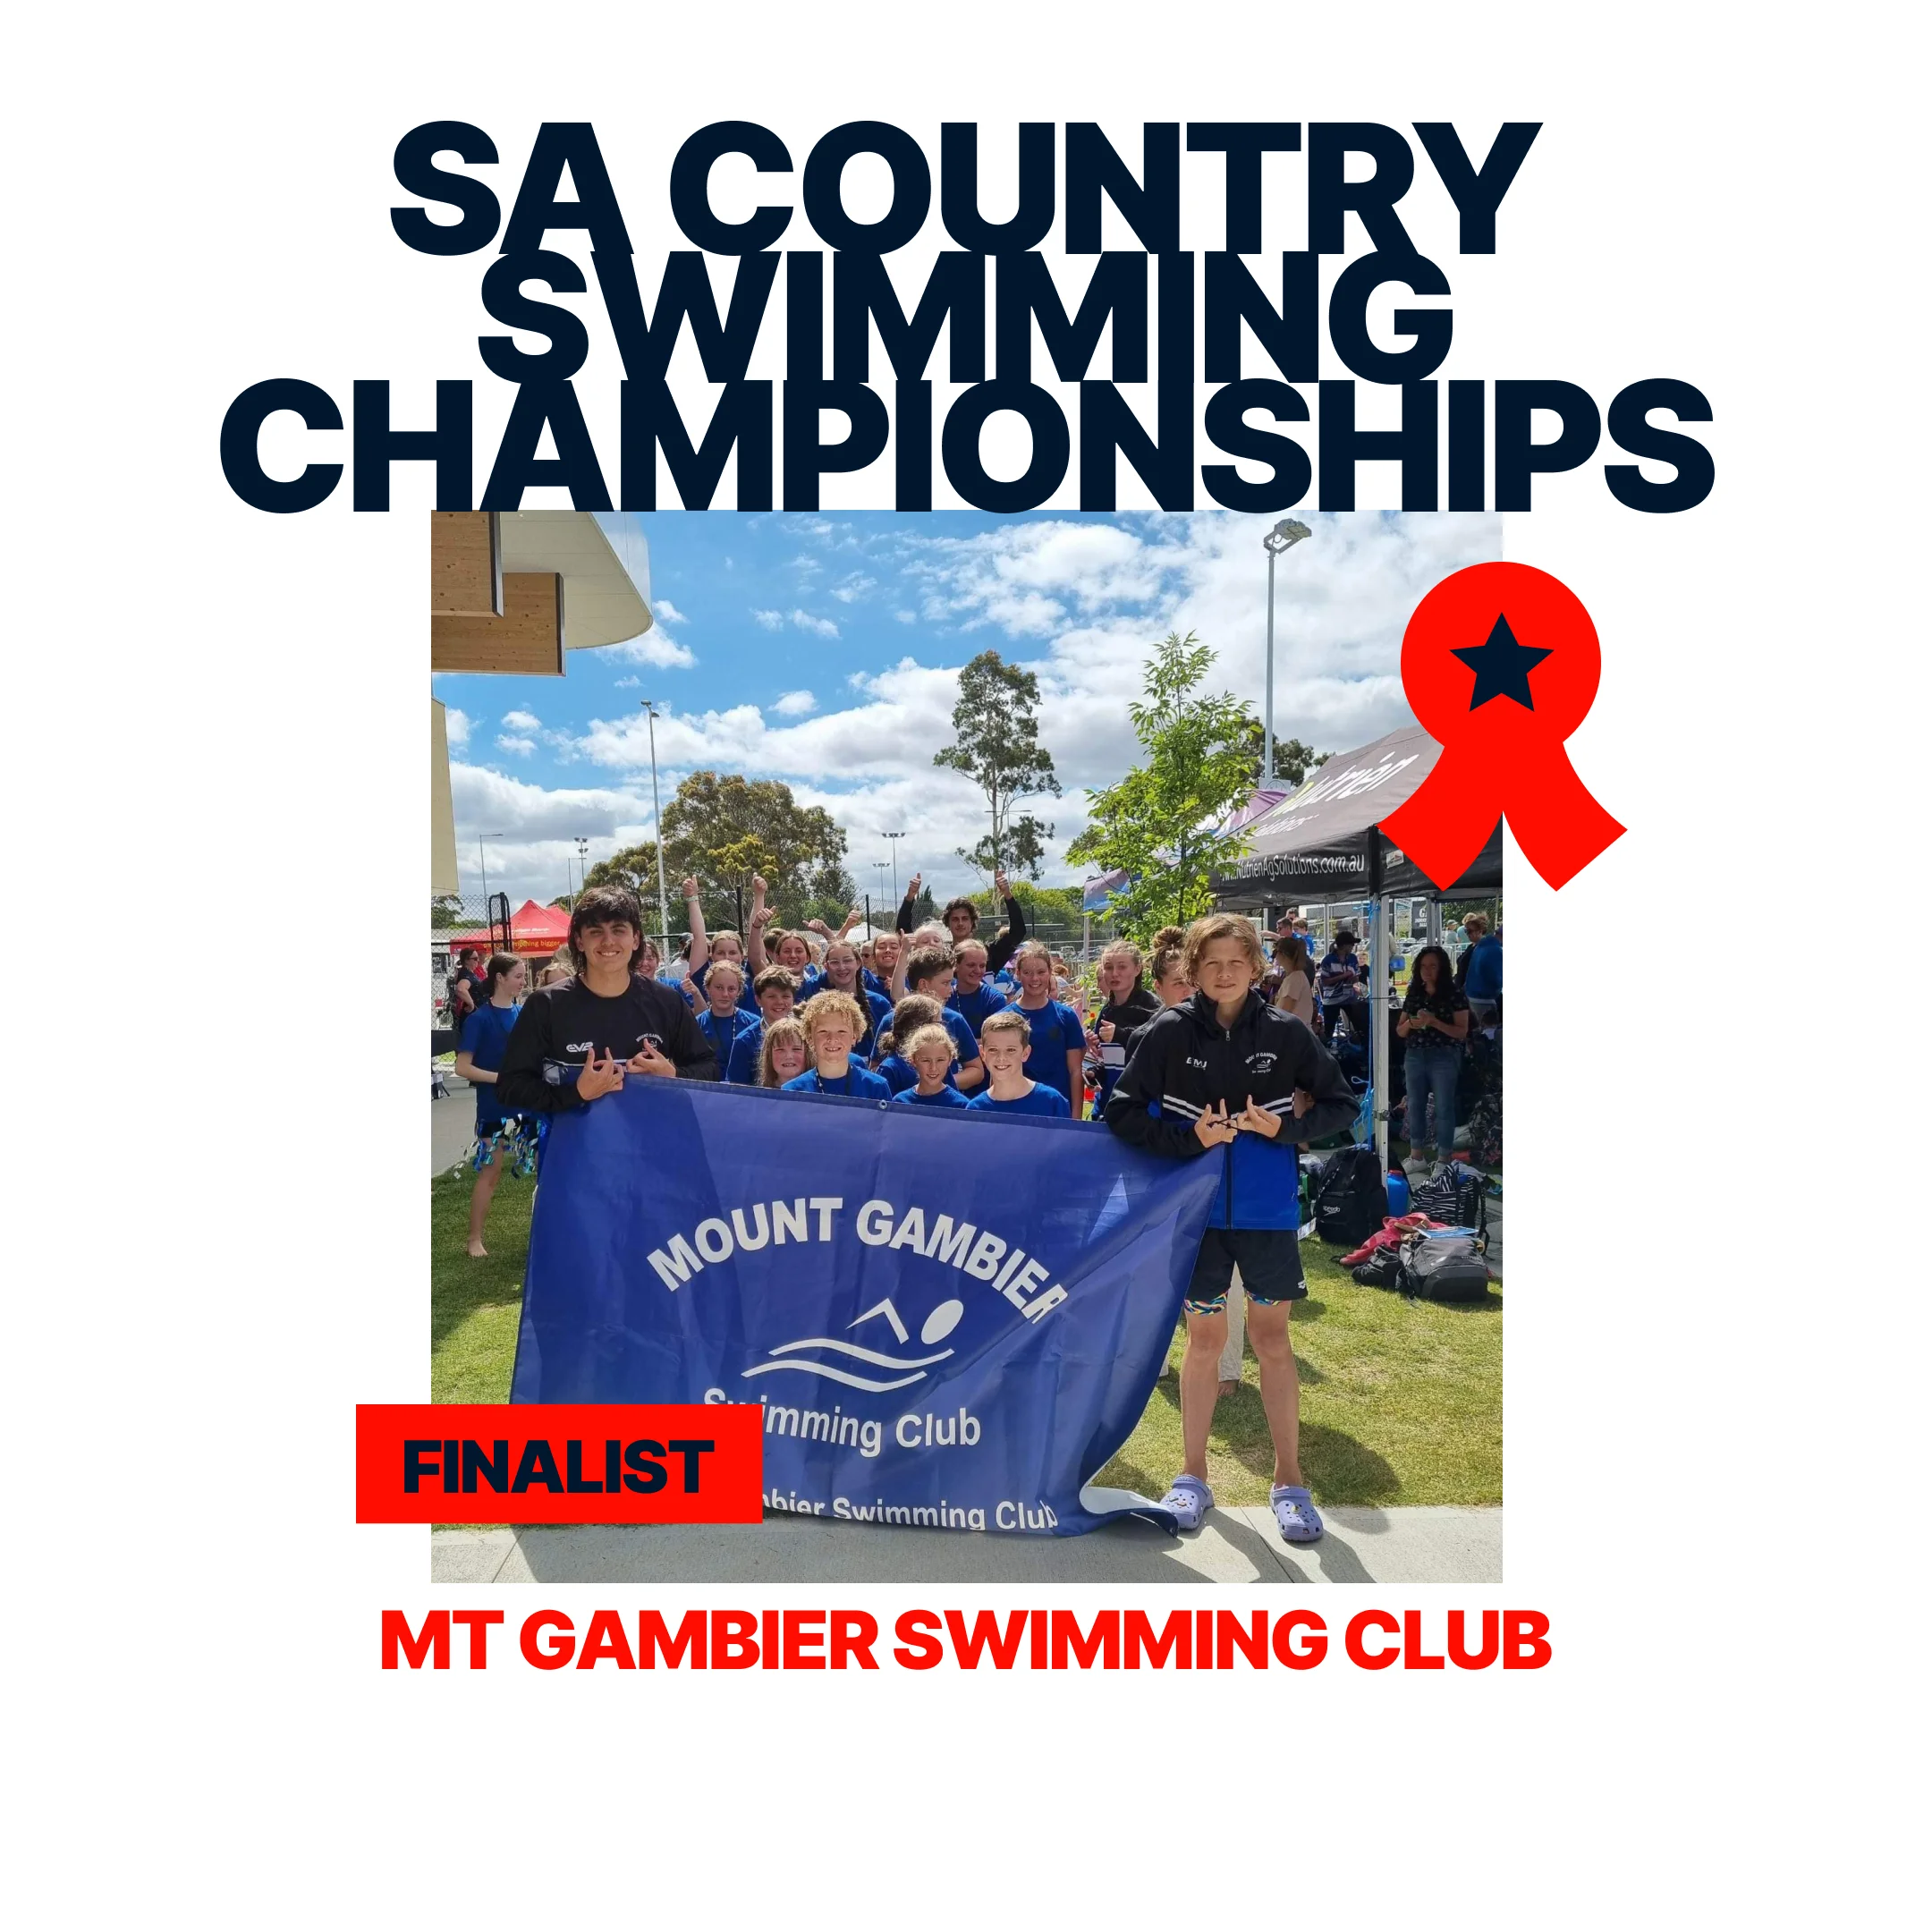 SA Country Swimming Championship, Mt Gambier Swimming Club